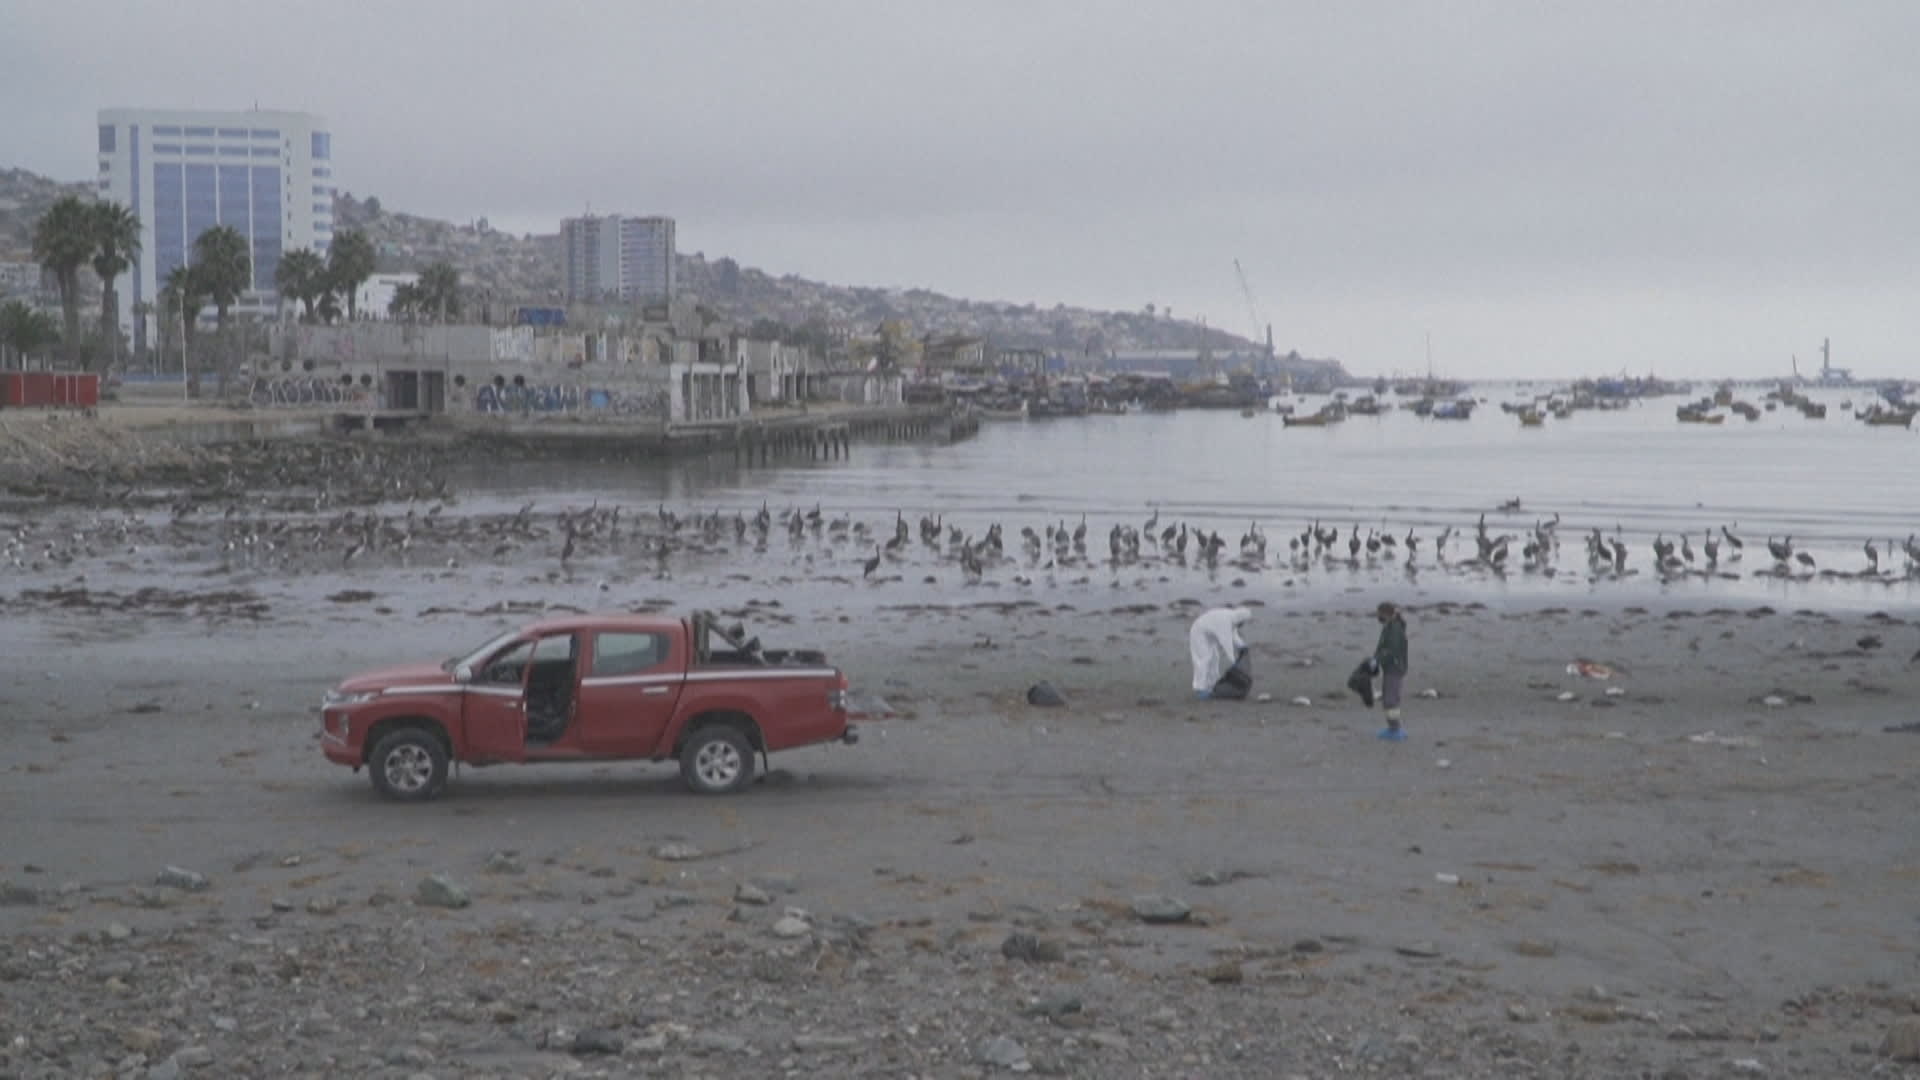 Záhadný úhyn ptáků na pláži v Chile